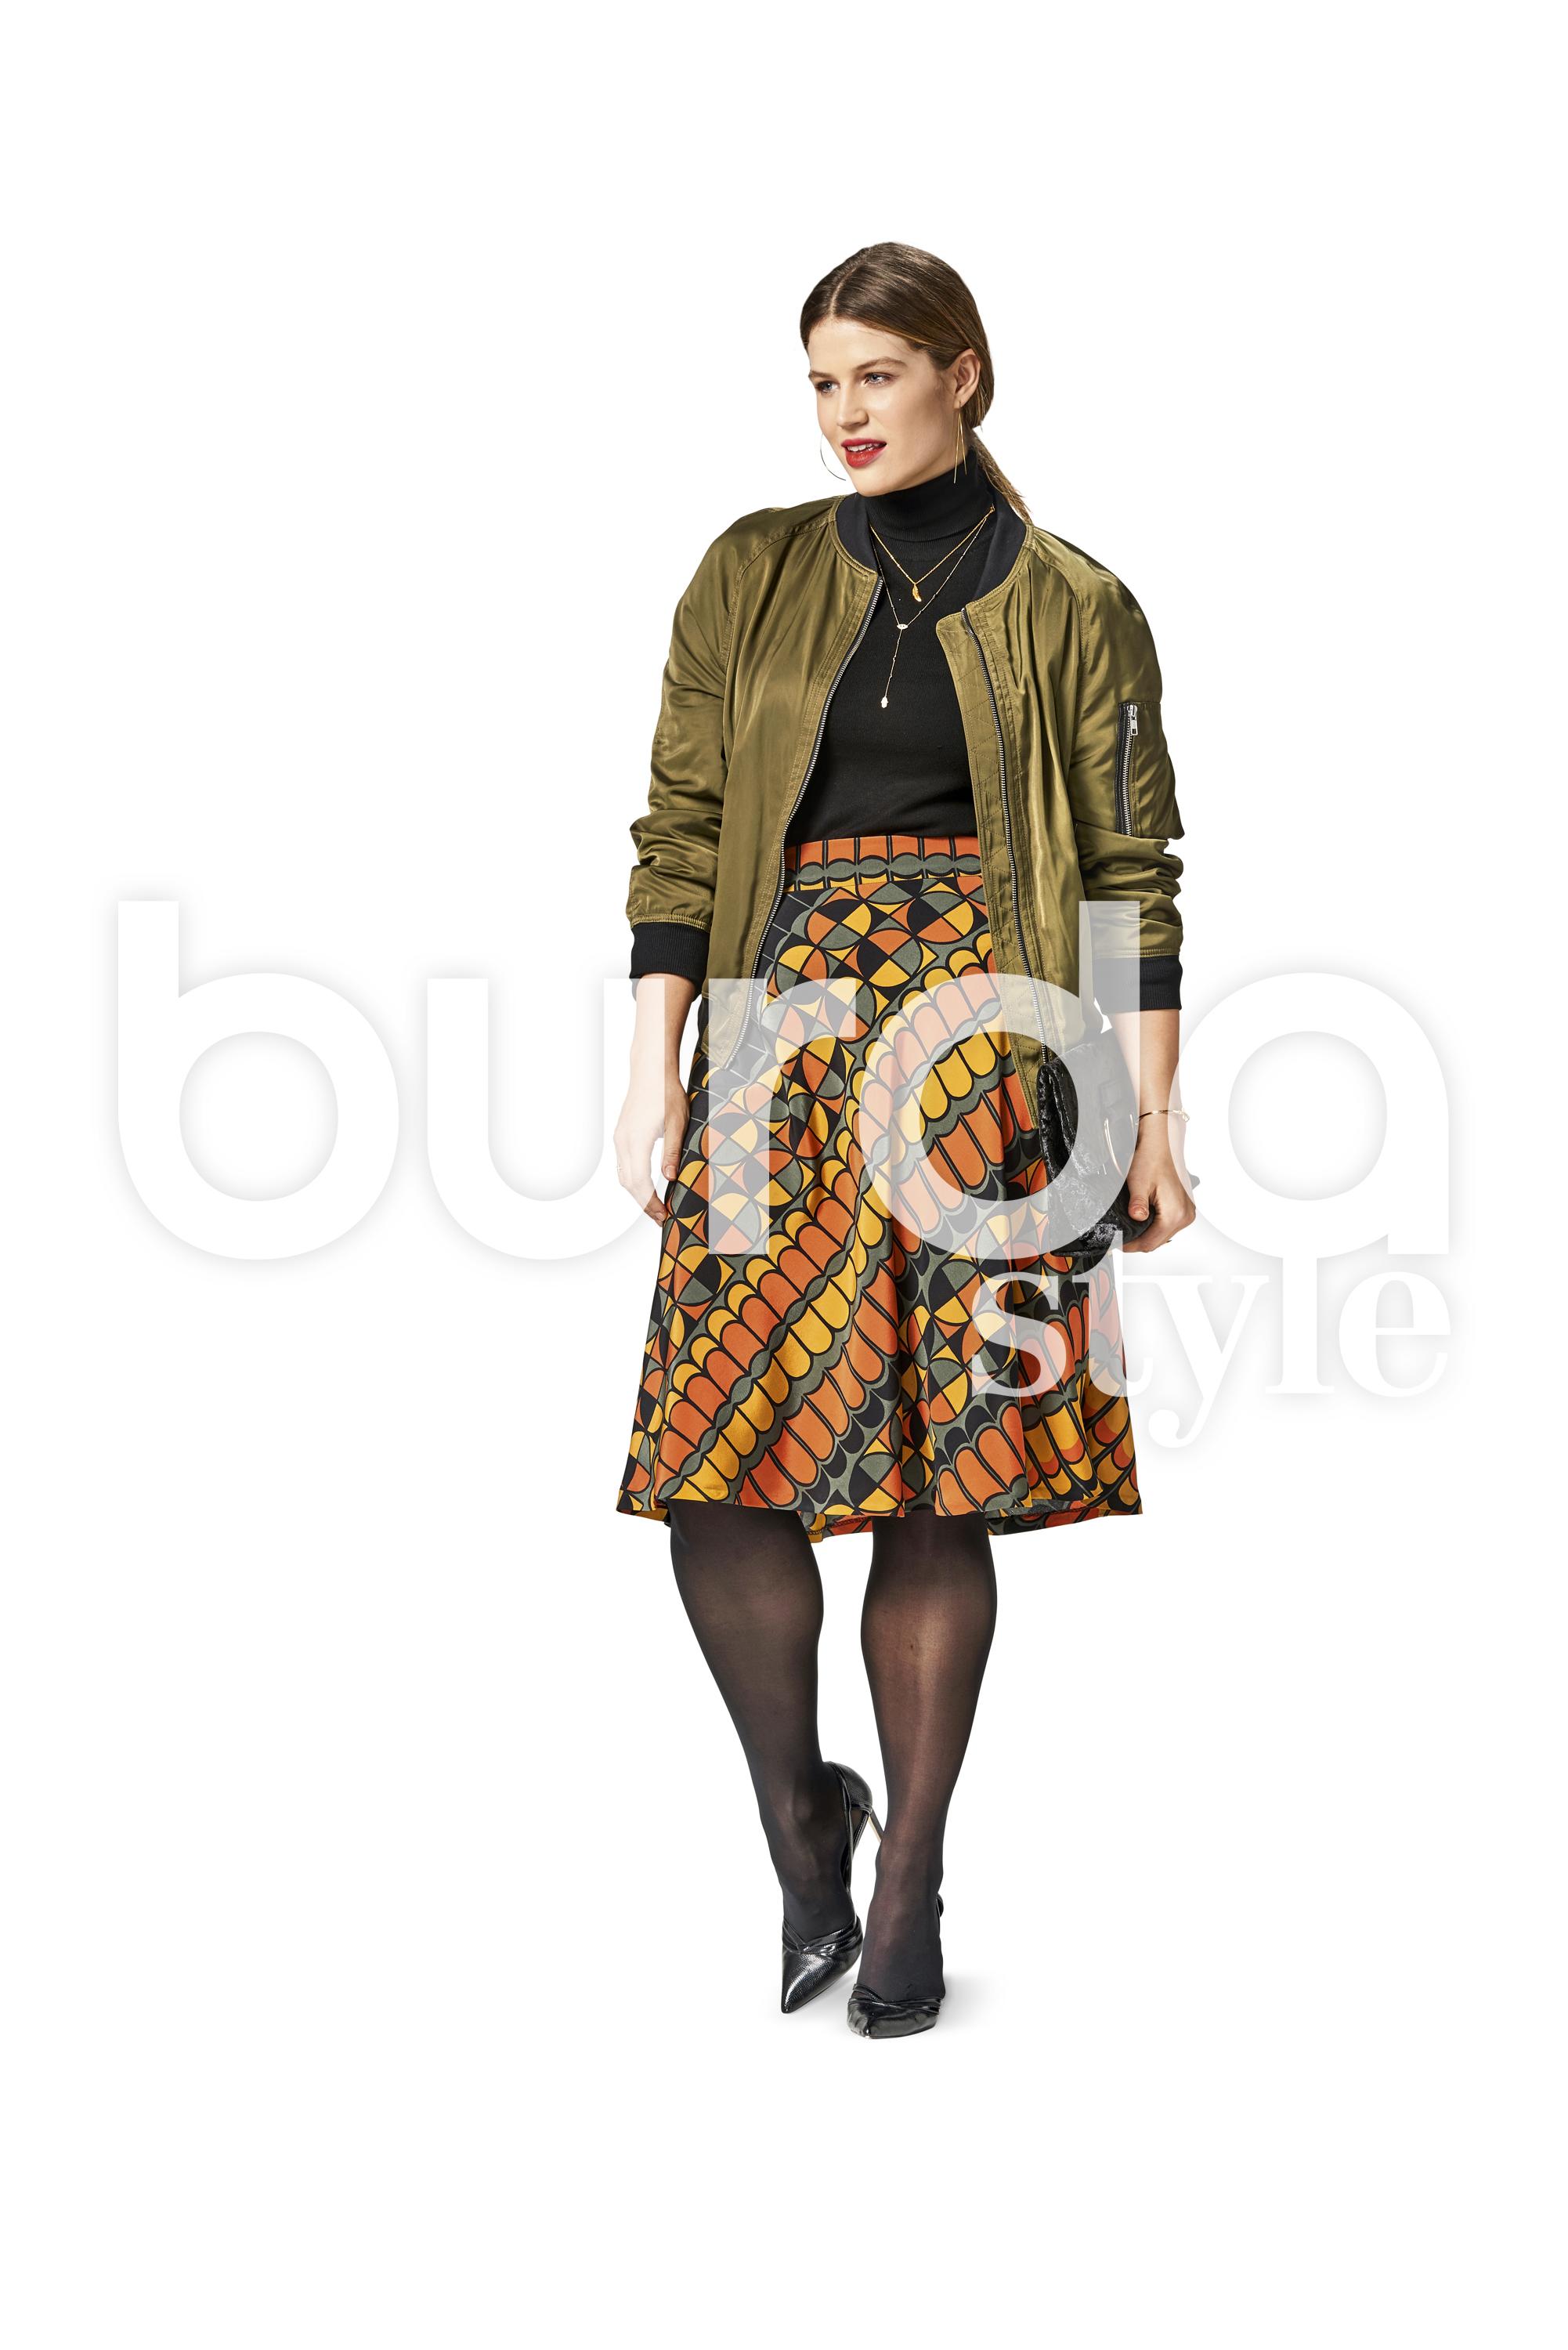 Burda B6489 Women's Hooded Jacket